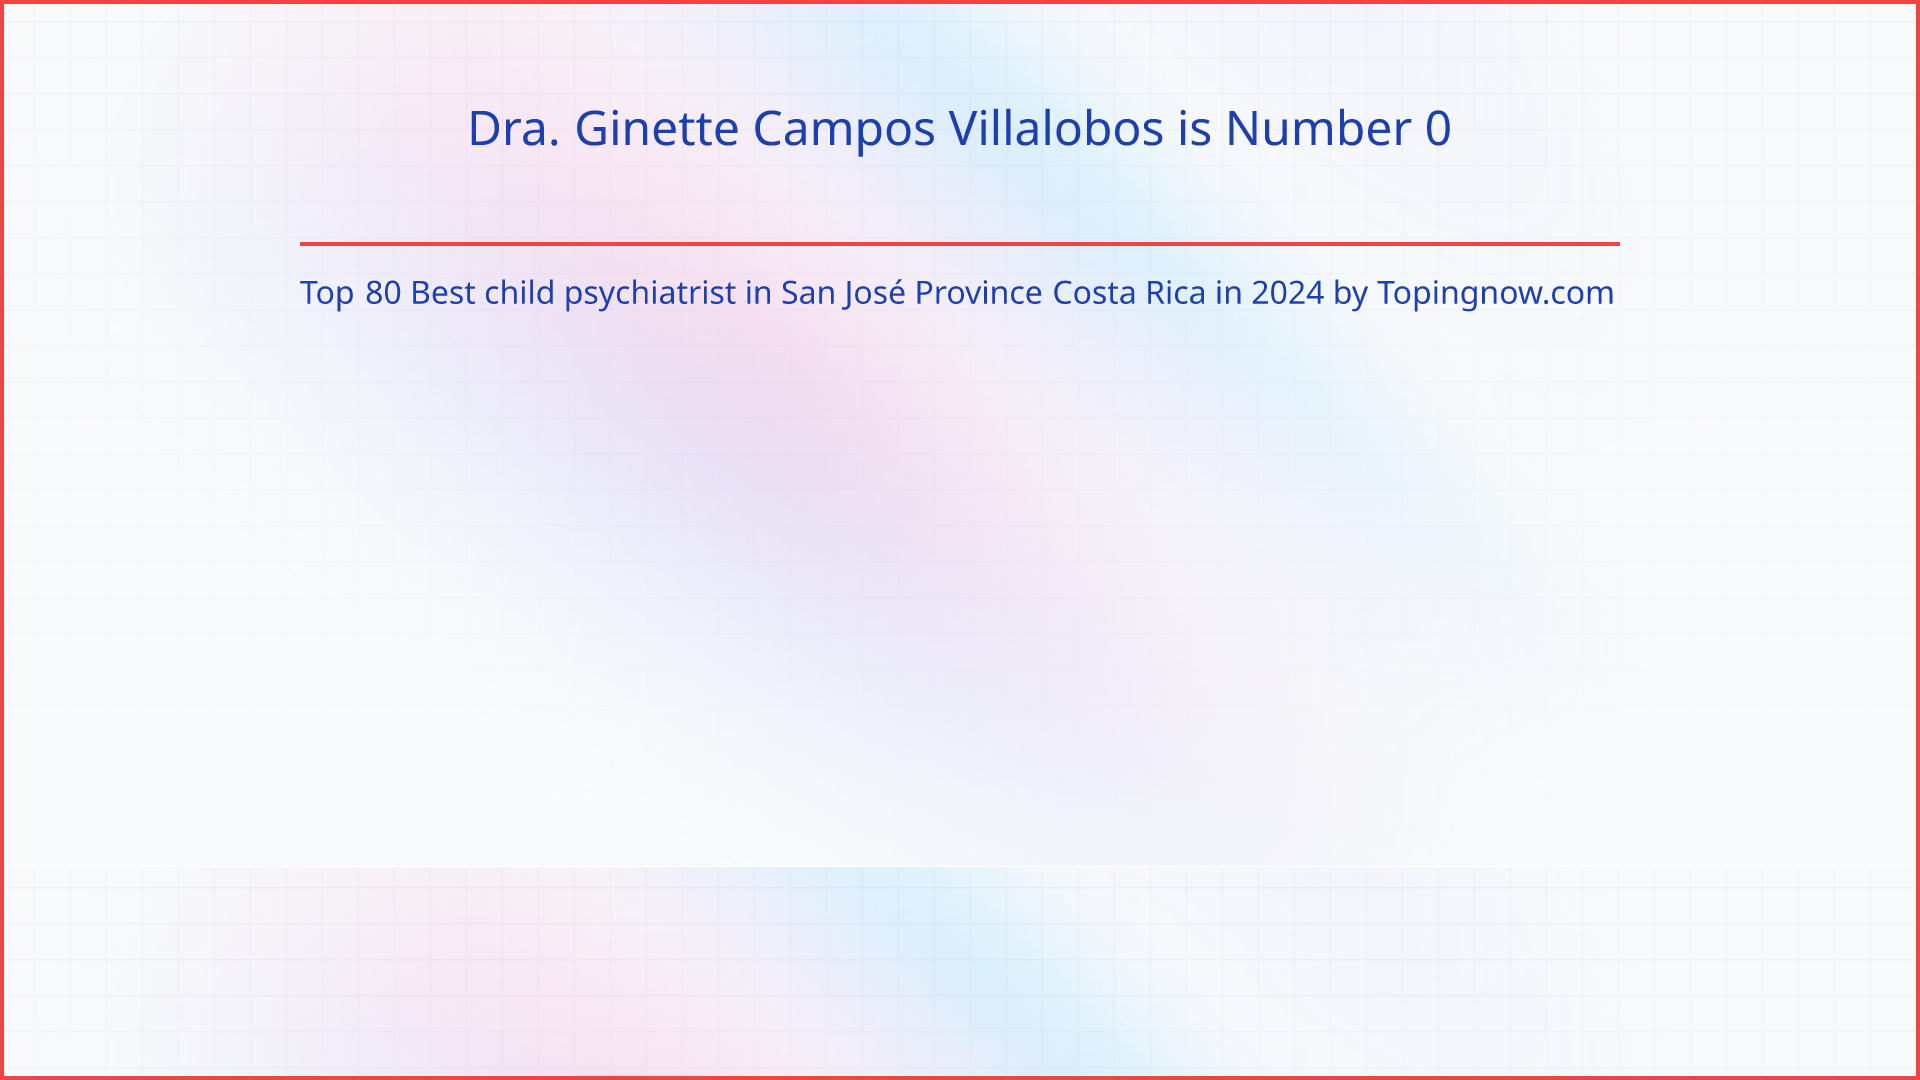 Dra. Ginette Campos Villalobos: Top 80 Best child psychiatrist in San José Province Costa Rica in 2024